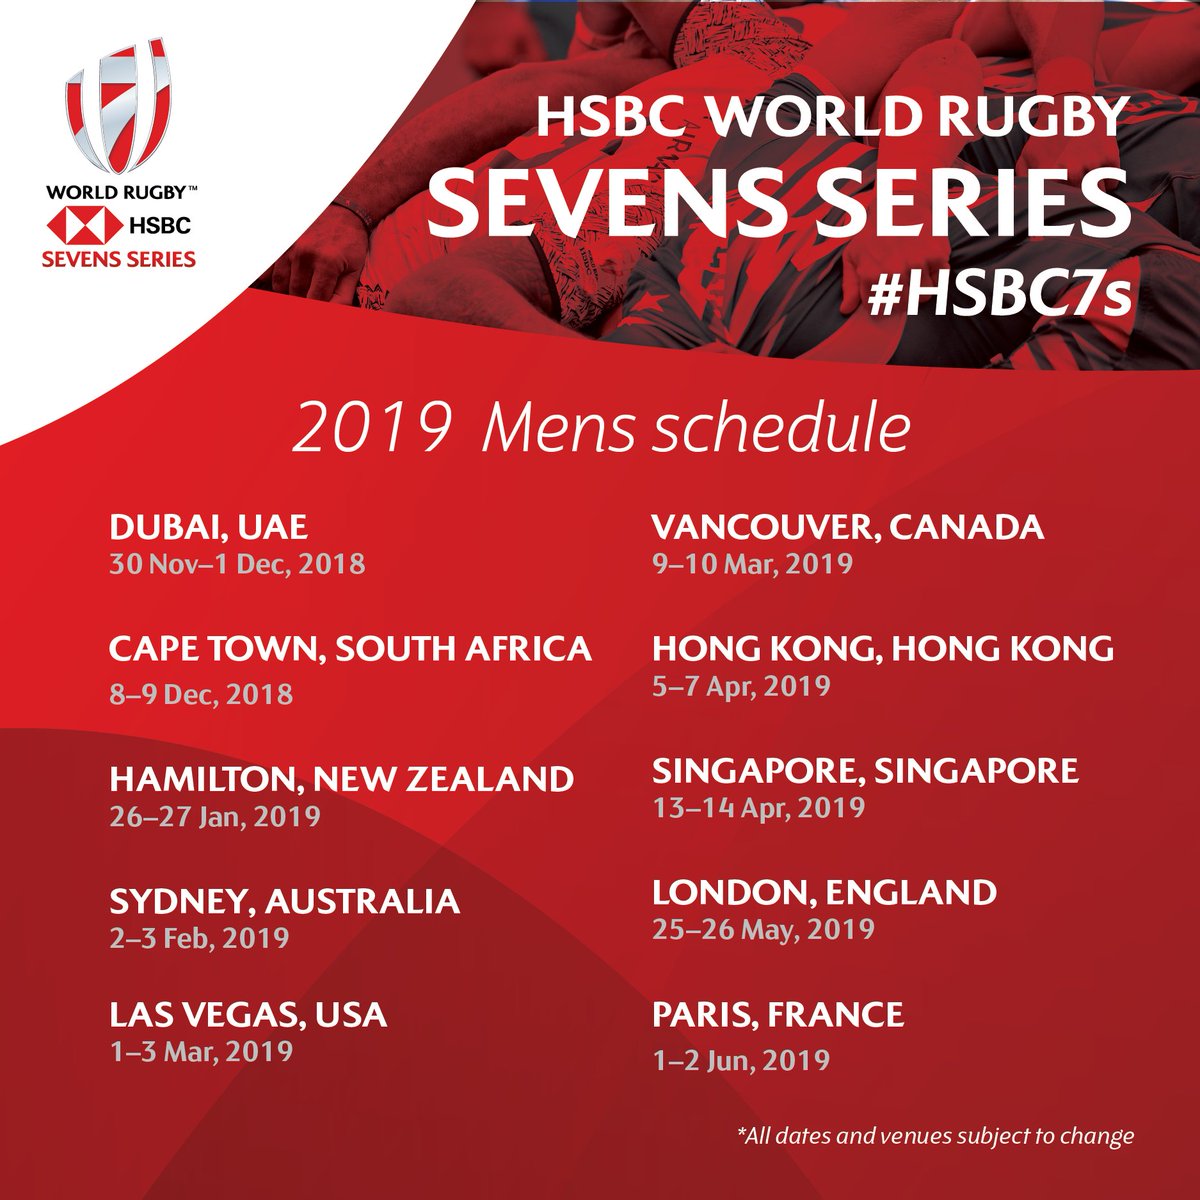 📆 HSBC World Rugby Men's Sevens Series 2019 #HSBC7s 2018 Dubai➡️30 - 1 Nov/Dec Cape Town➡️8-9 Dec 2019 Hamilton➡️26-27 Jan Sydney ➡️2-3 Feb Las Vegas➡️1-3 Mar Vancouver➡️9-10 Mar Hong Kong➡️5-7 Apr Singapore➡️13-14 Apr London➡️25-26 May Paris ➡️1- 2 Jun